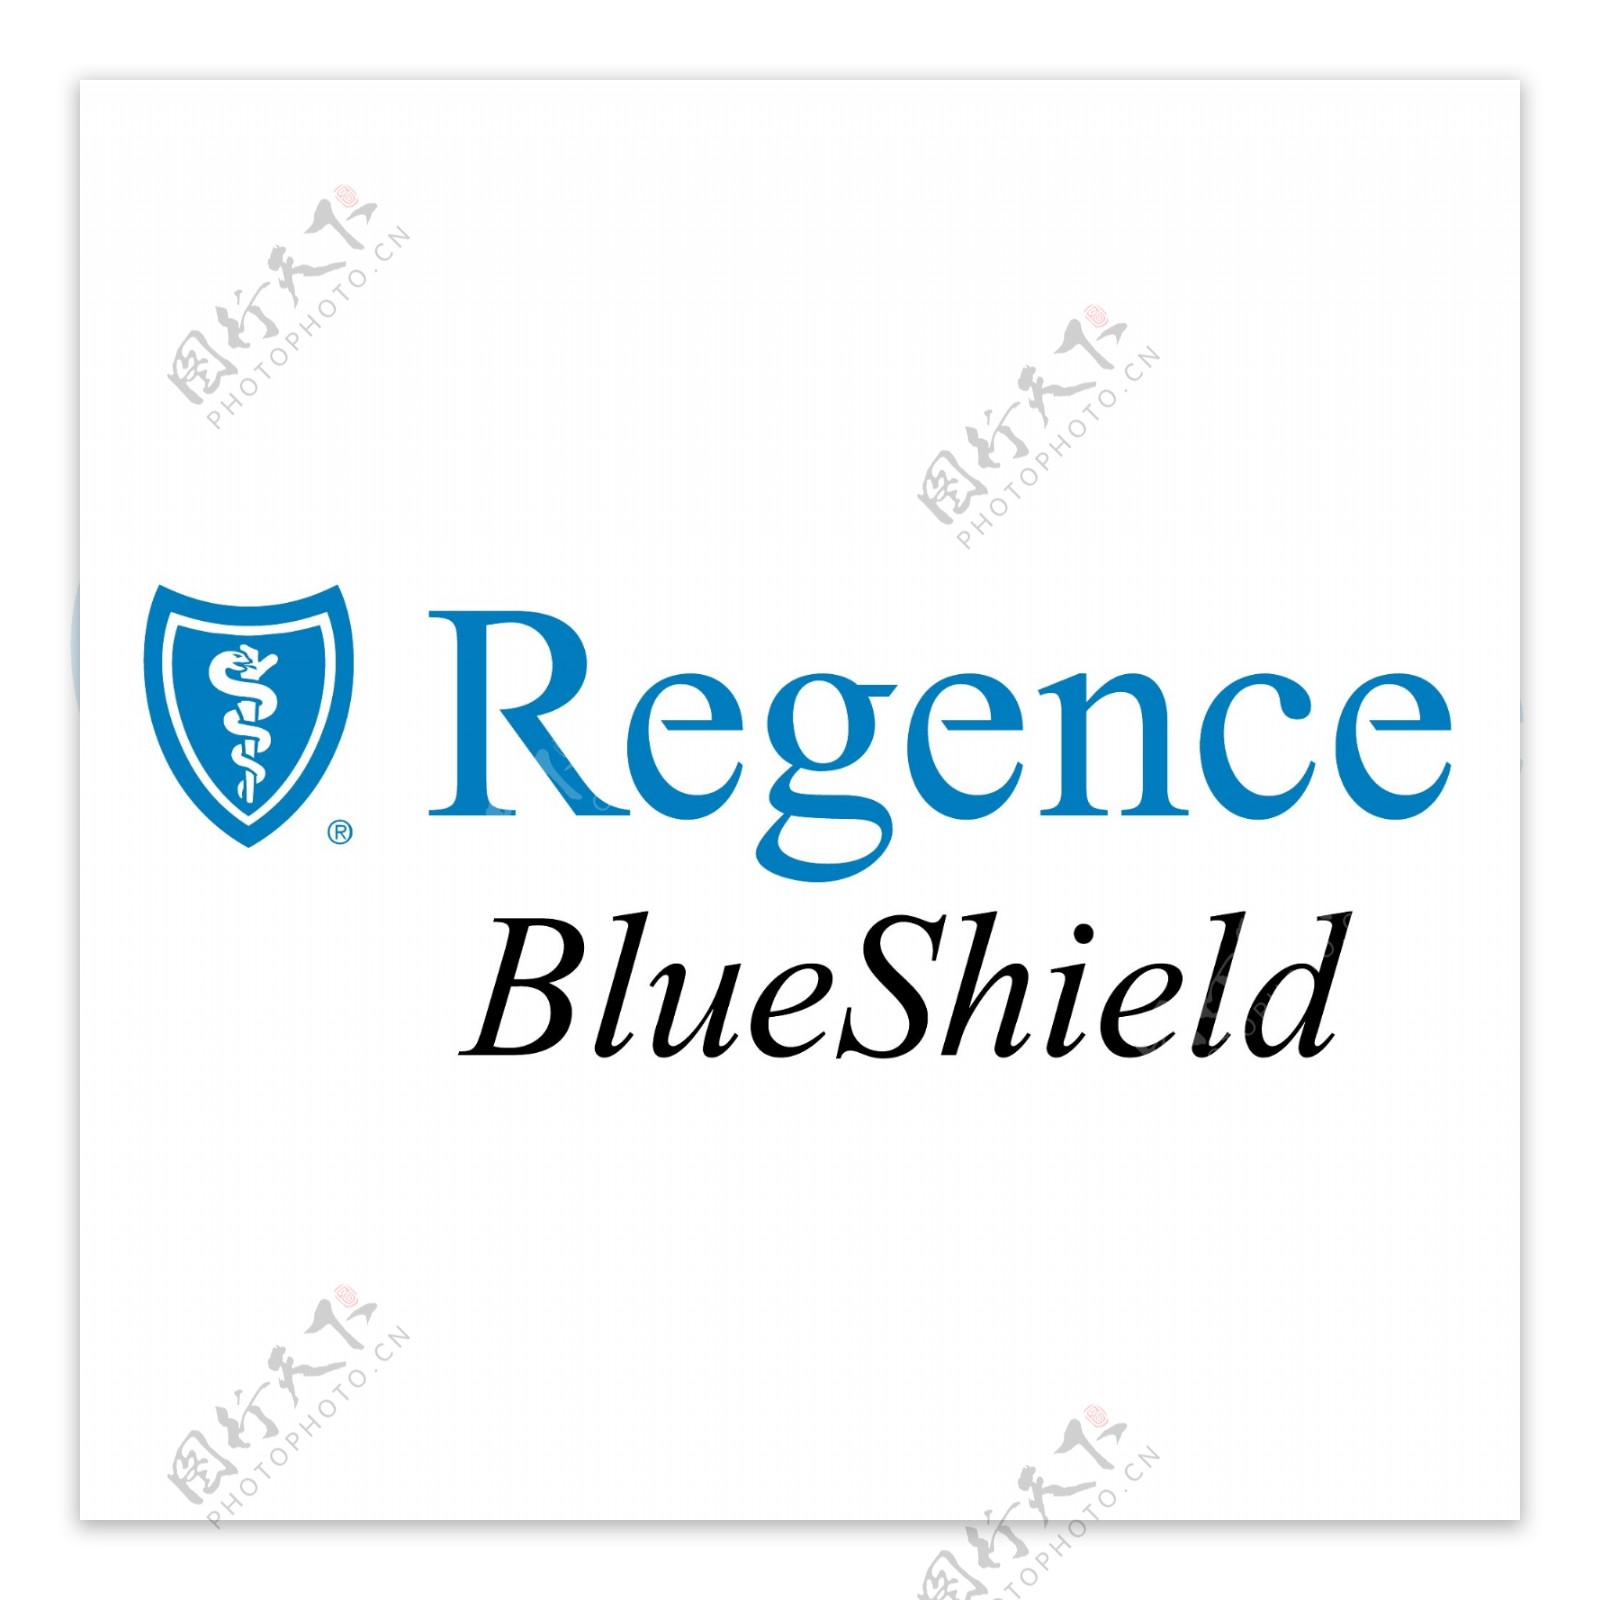 RegenceBlueShield